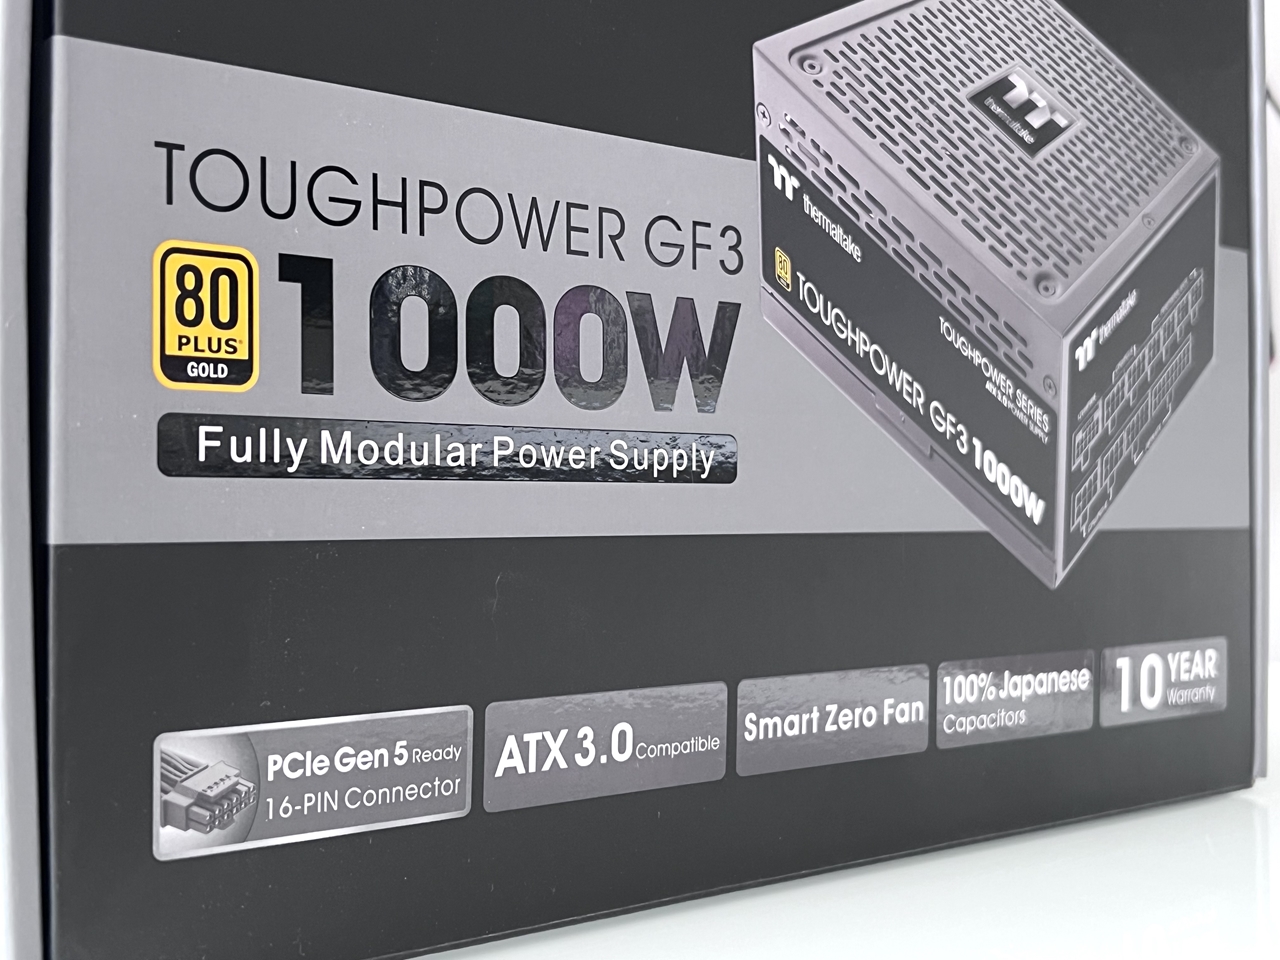 Thermaltake TOUGHPOWER GF3 1000W Gold Power Supply Review - Funky Kit